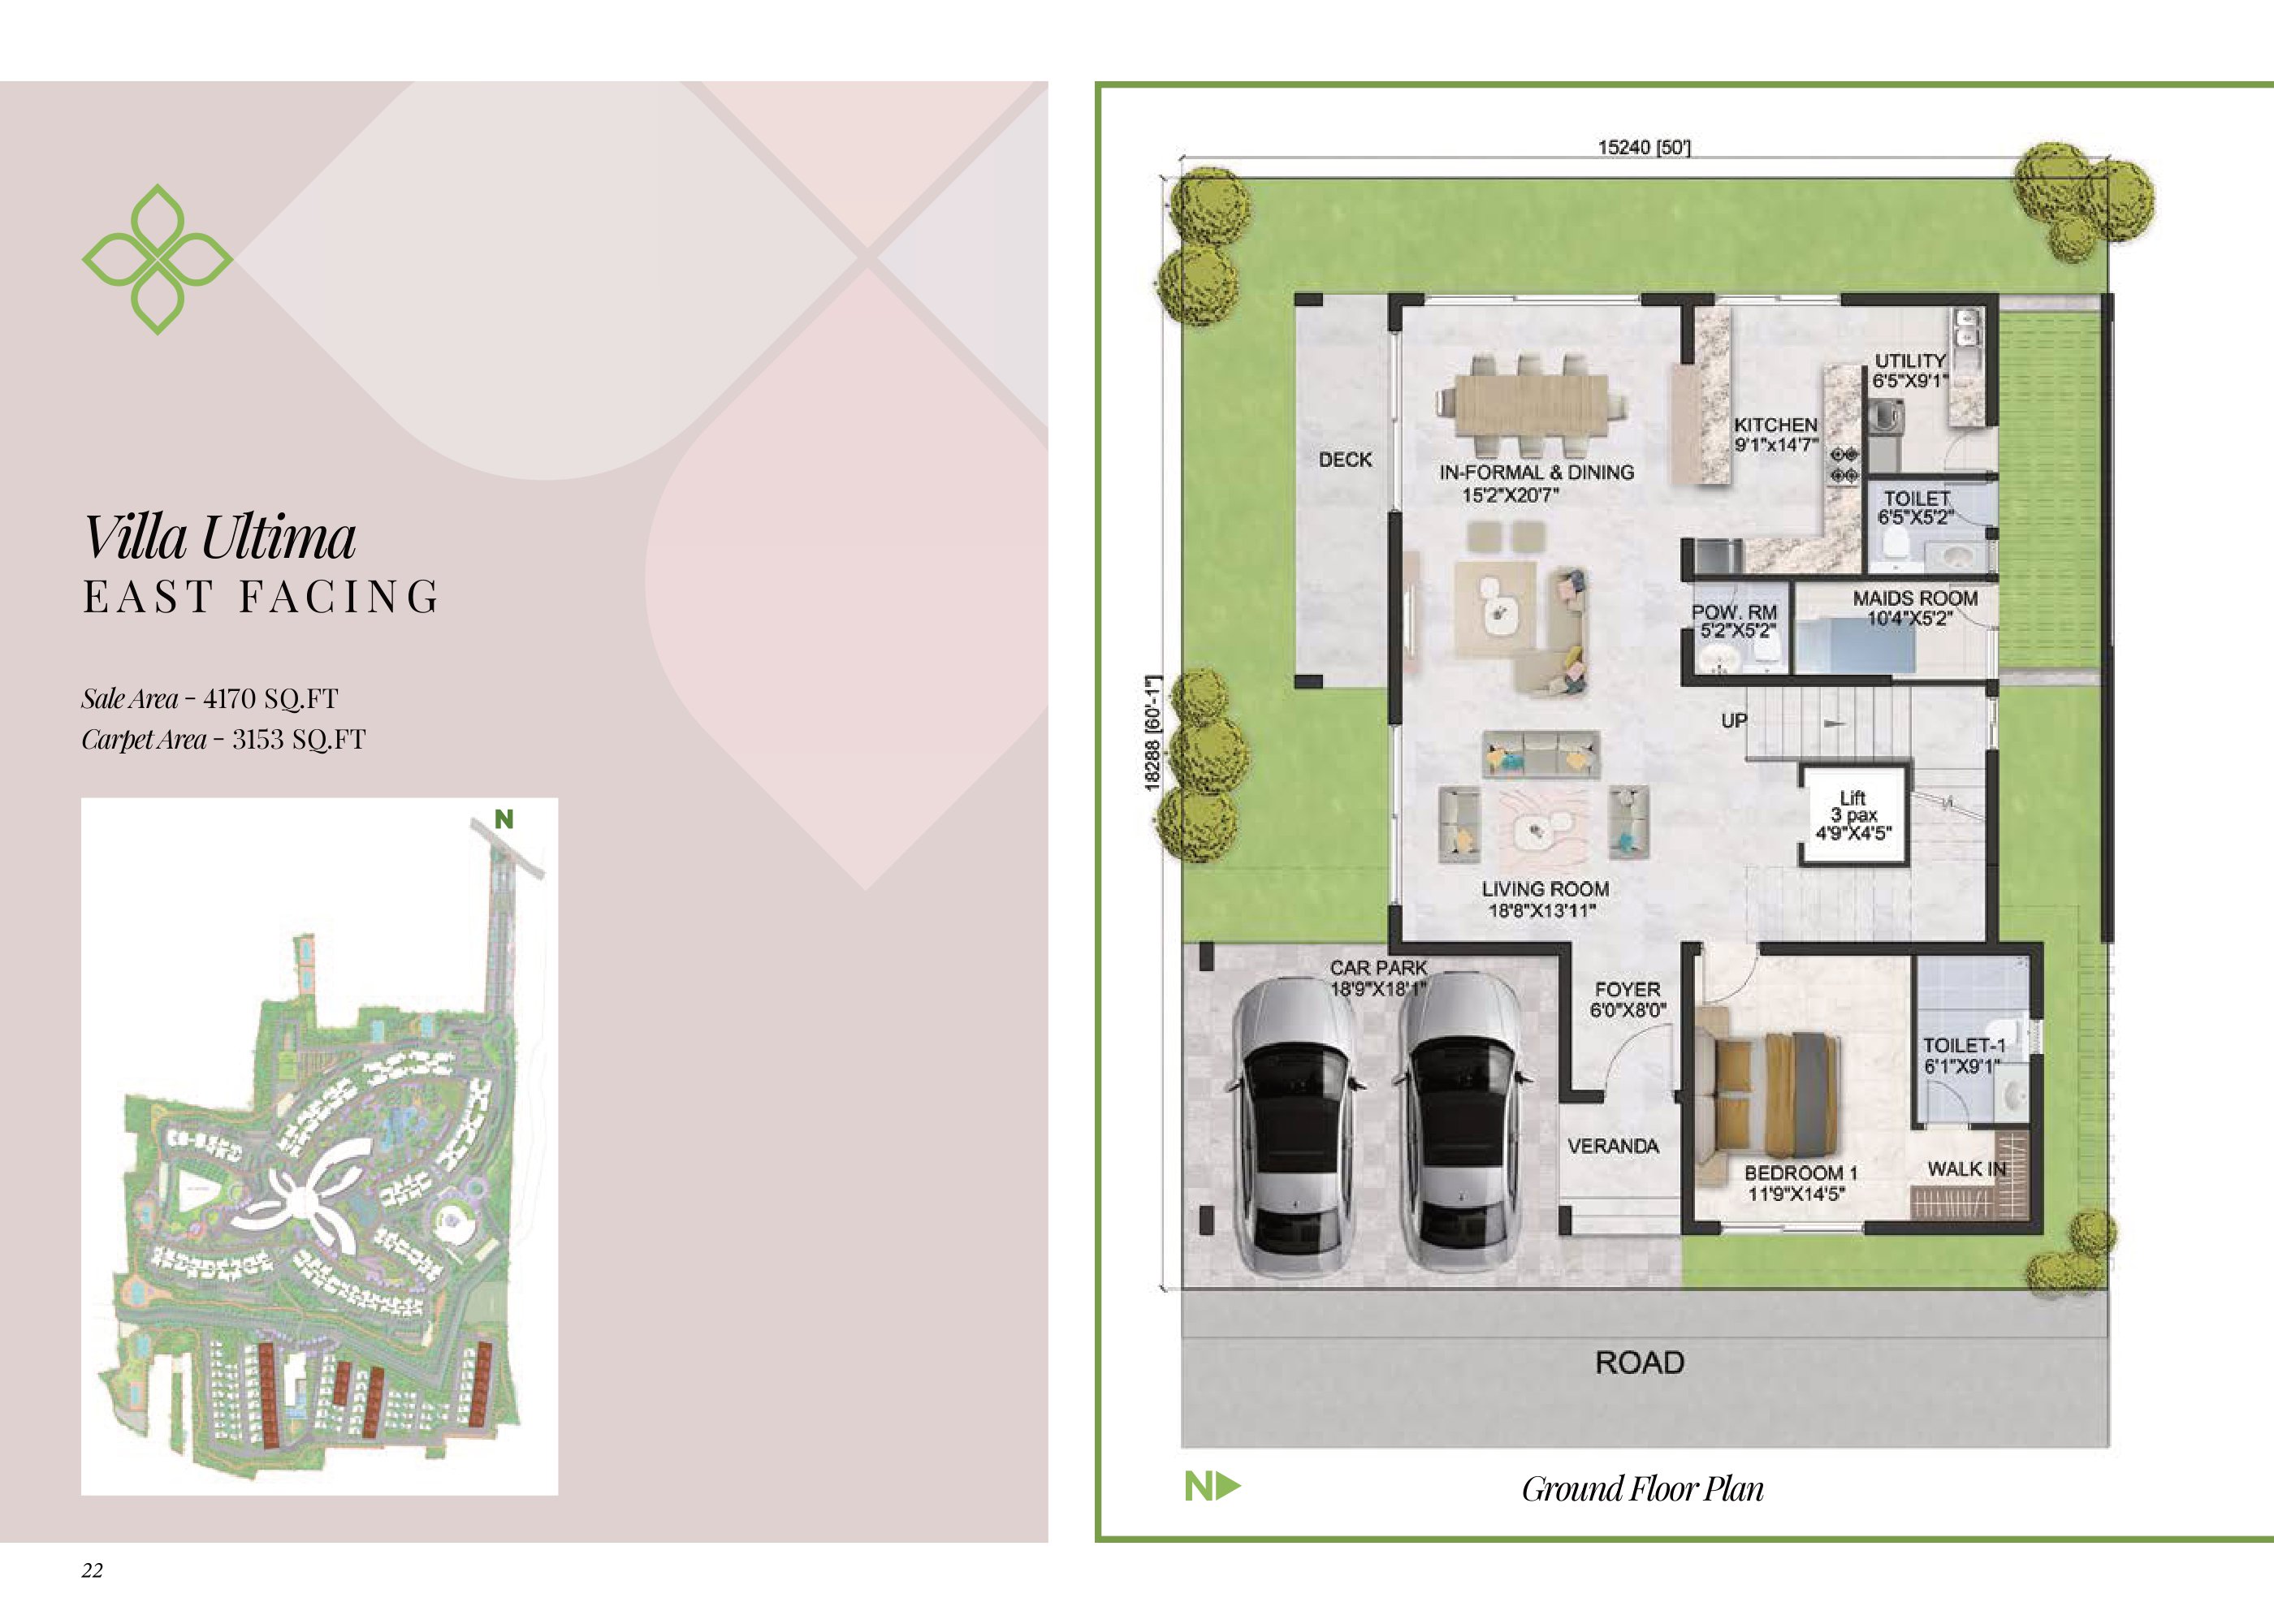 4 BHK Villa Ultima Ground Floor Plan of Prestige Park Grove